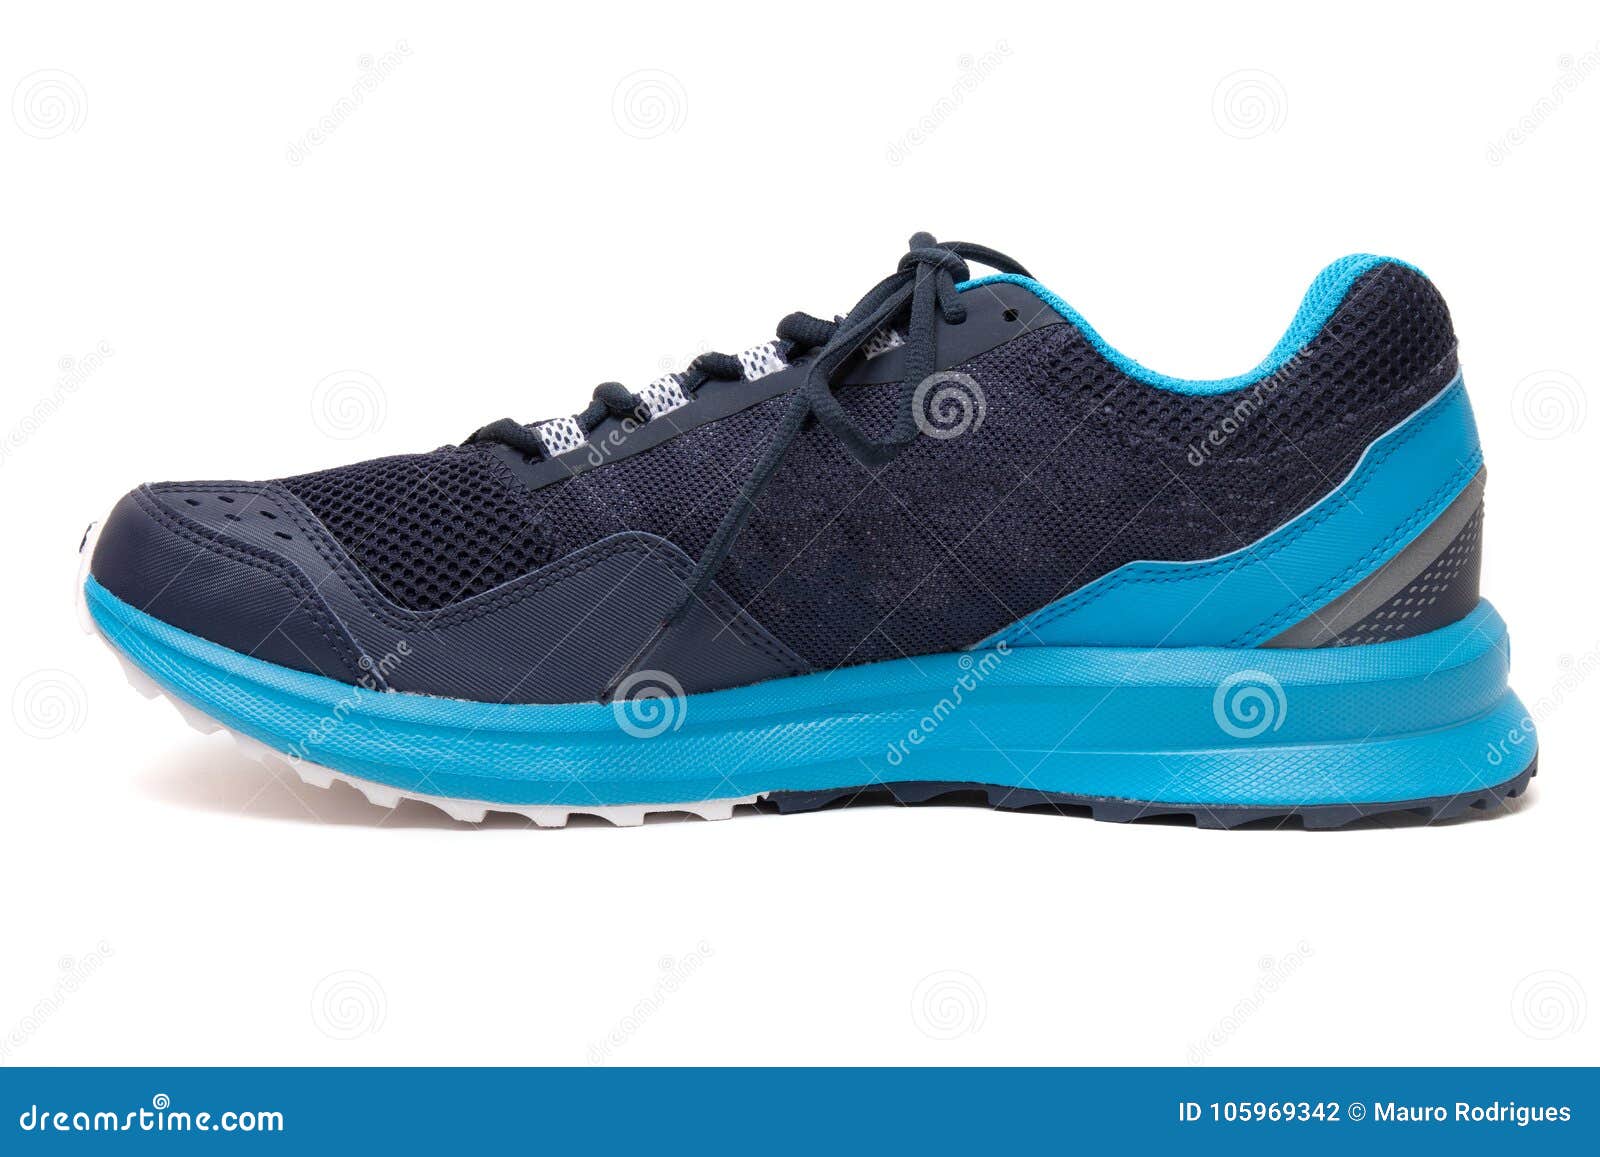 Man sports tennis shoes stock photo. Image of shoe, clothing - 105969342